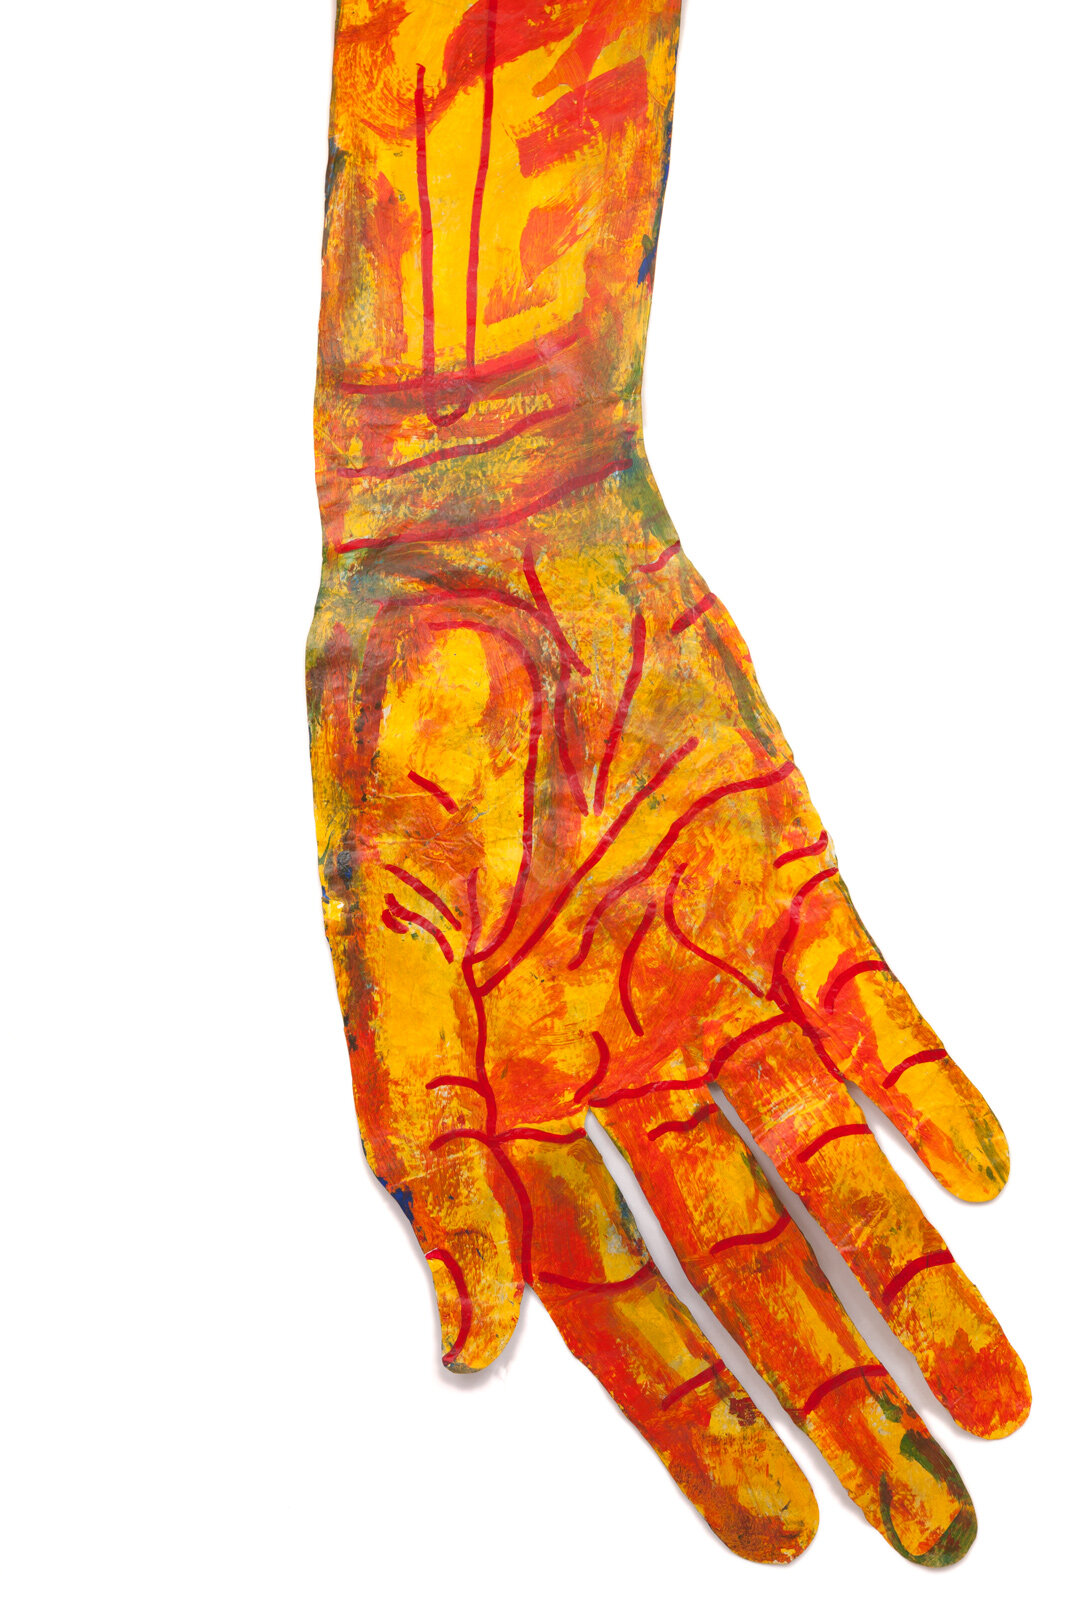 Giant Hand Six, detail